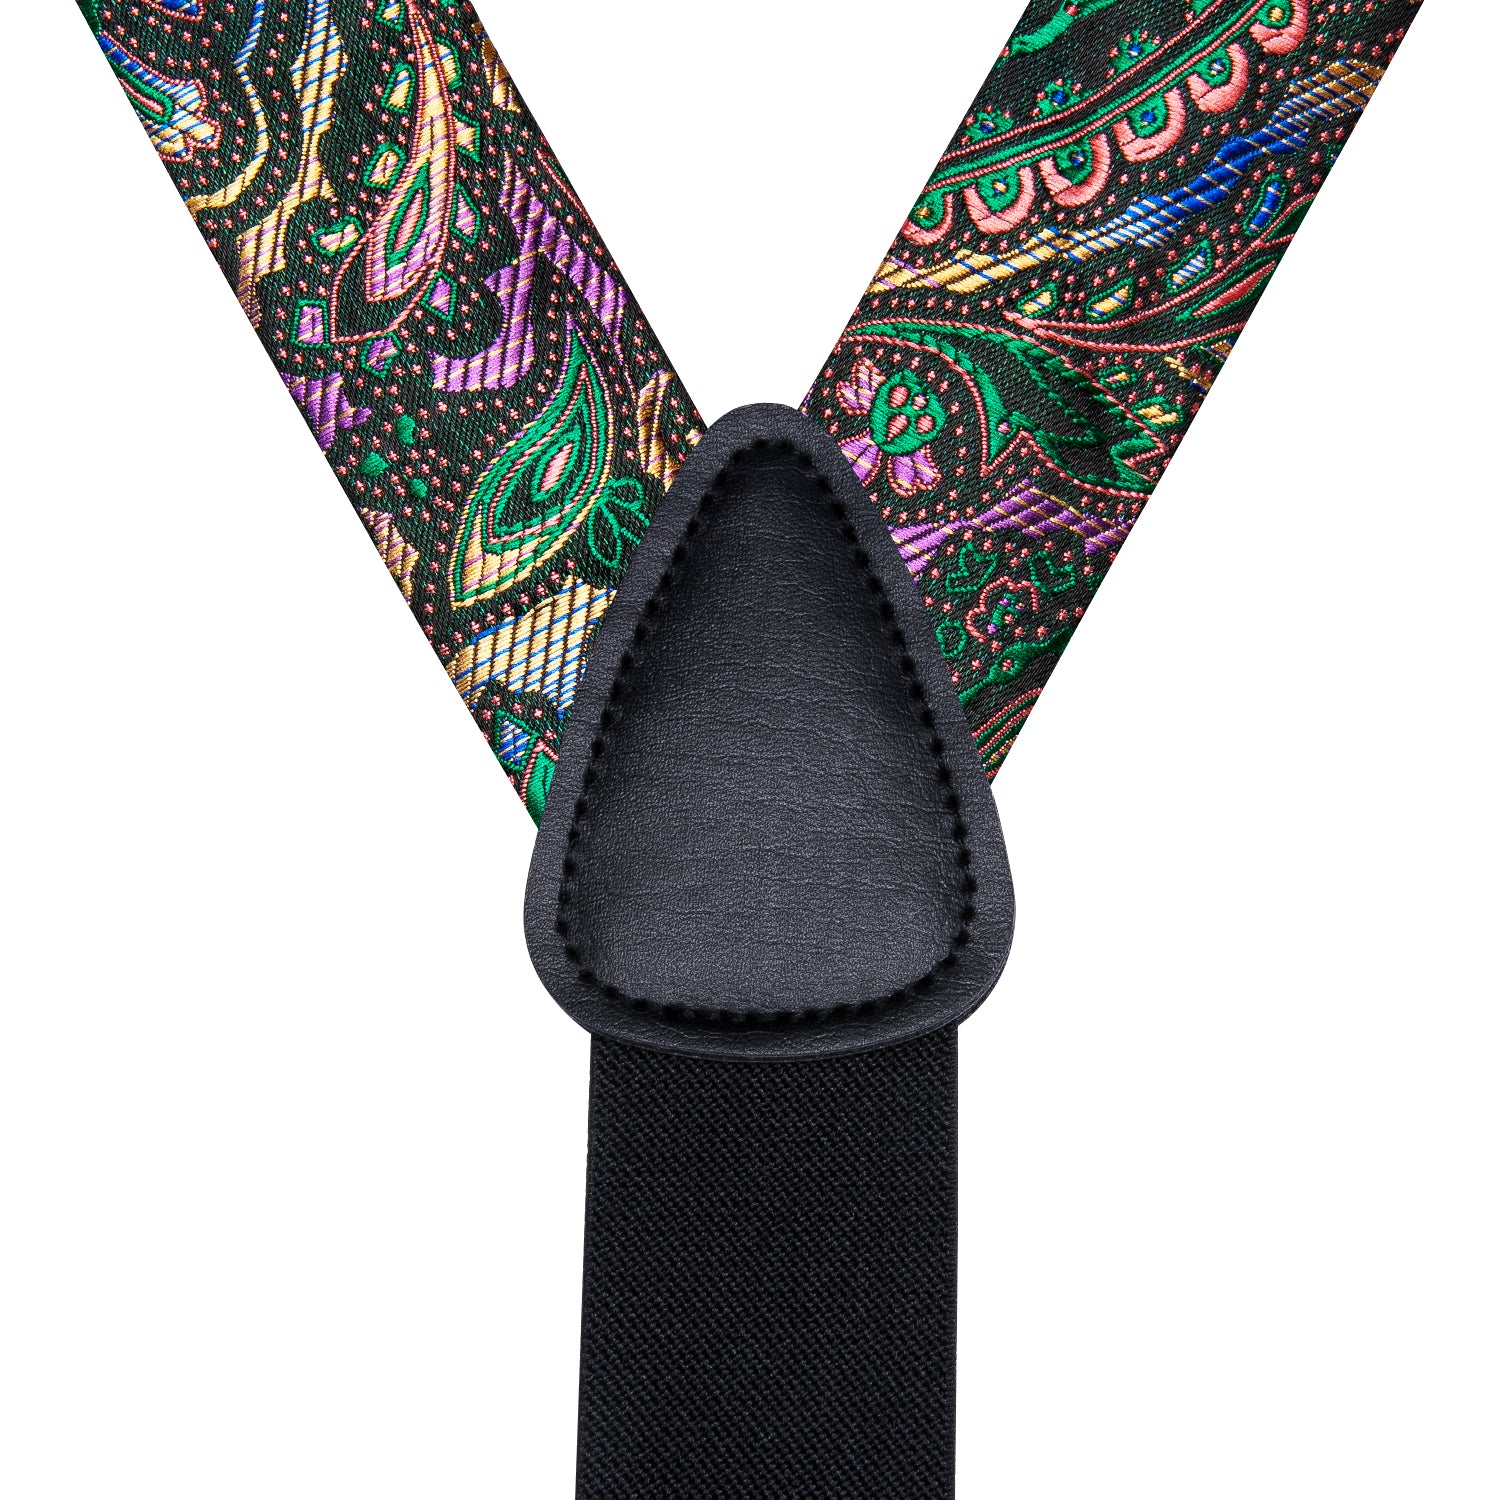 New Colorful Paisley Men's Suspender Bowtie Pocket Square Cufflinks Set